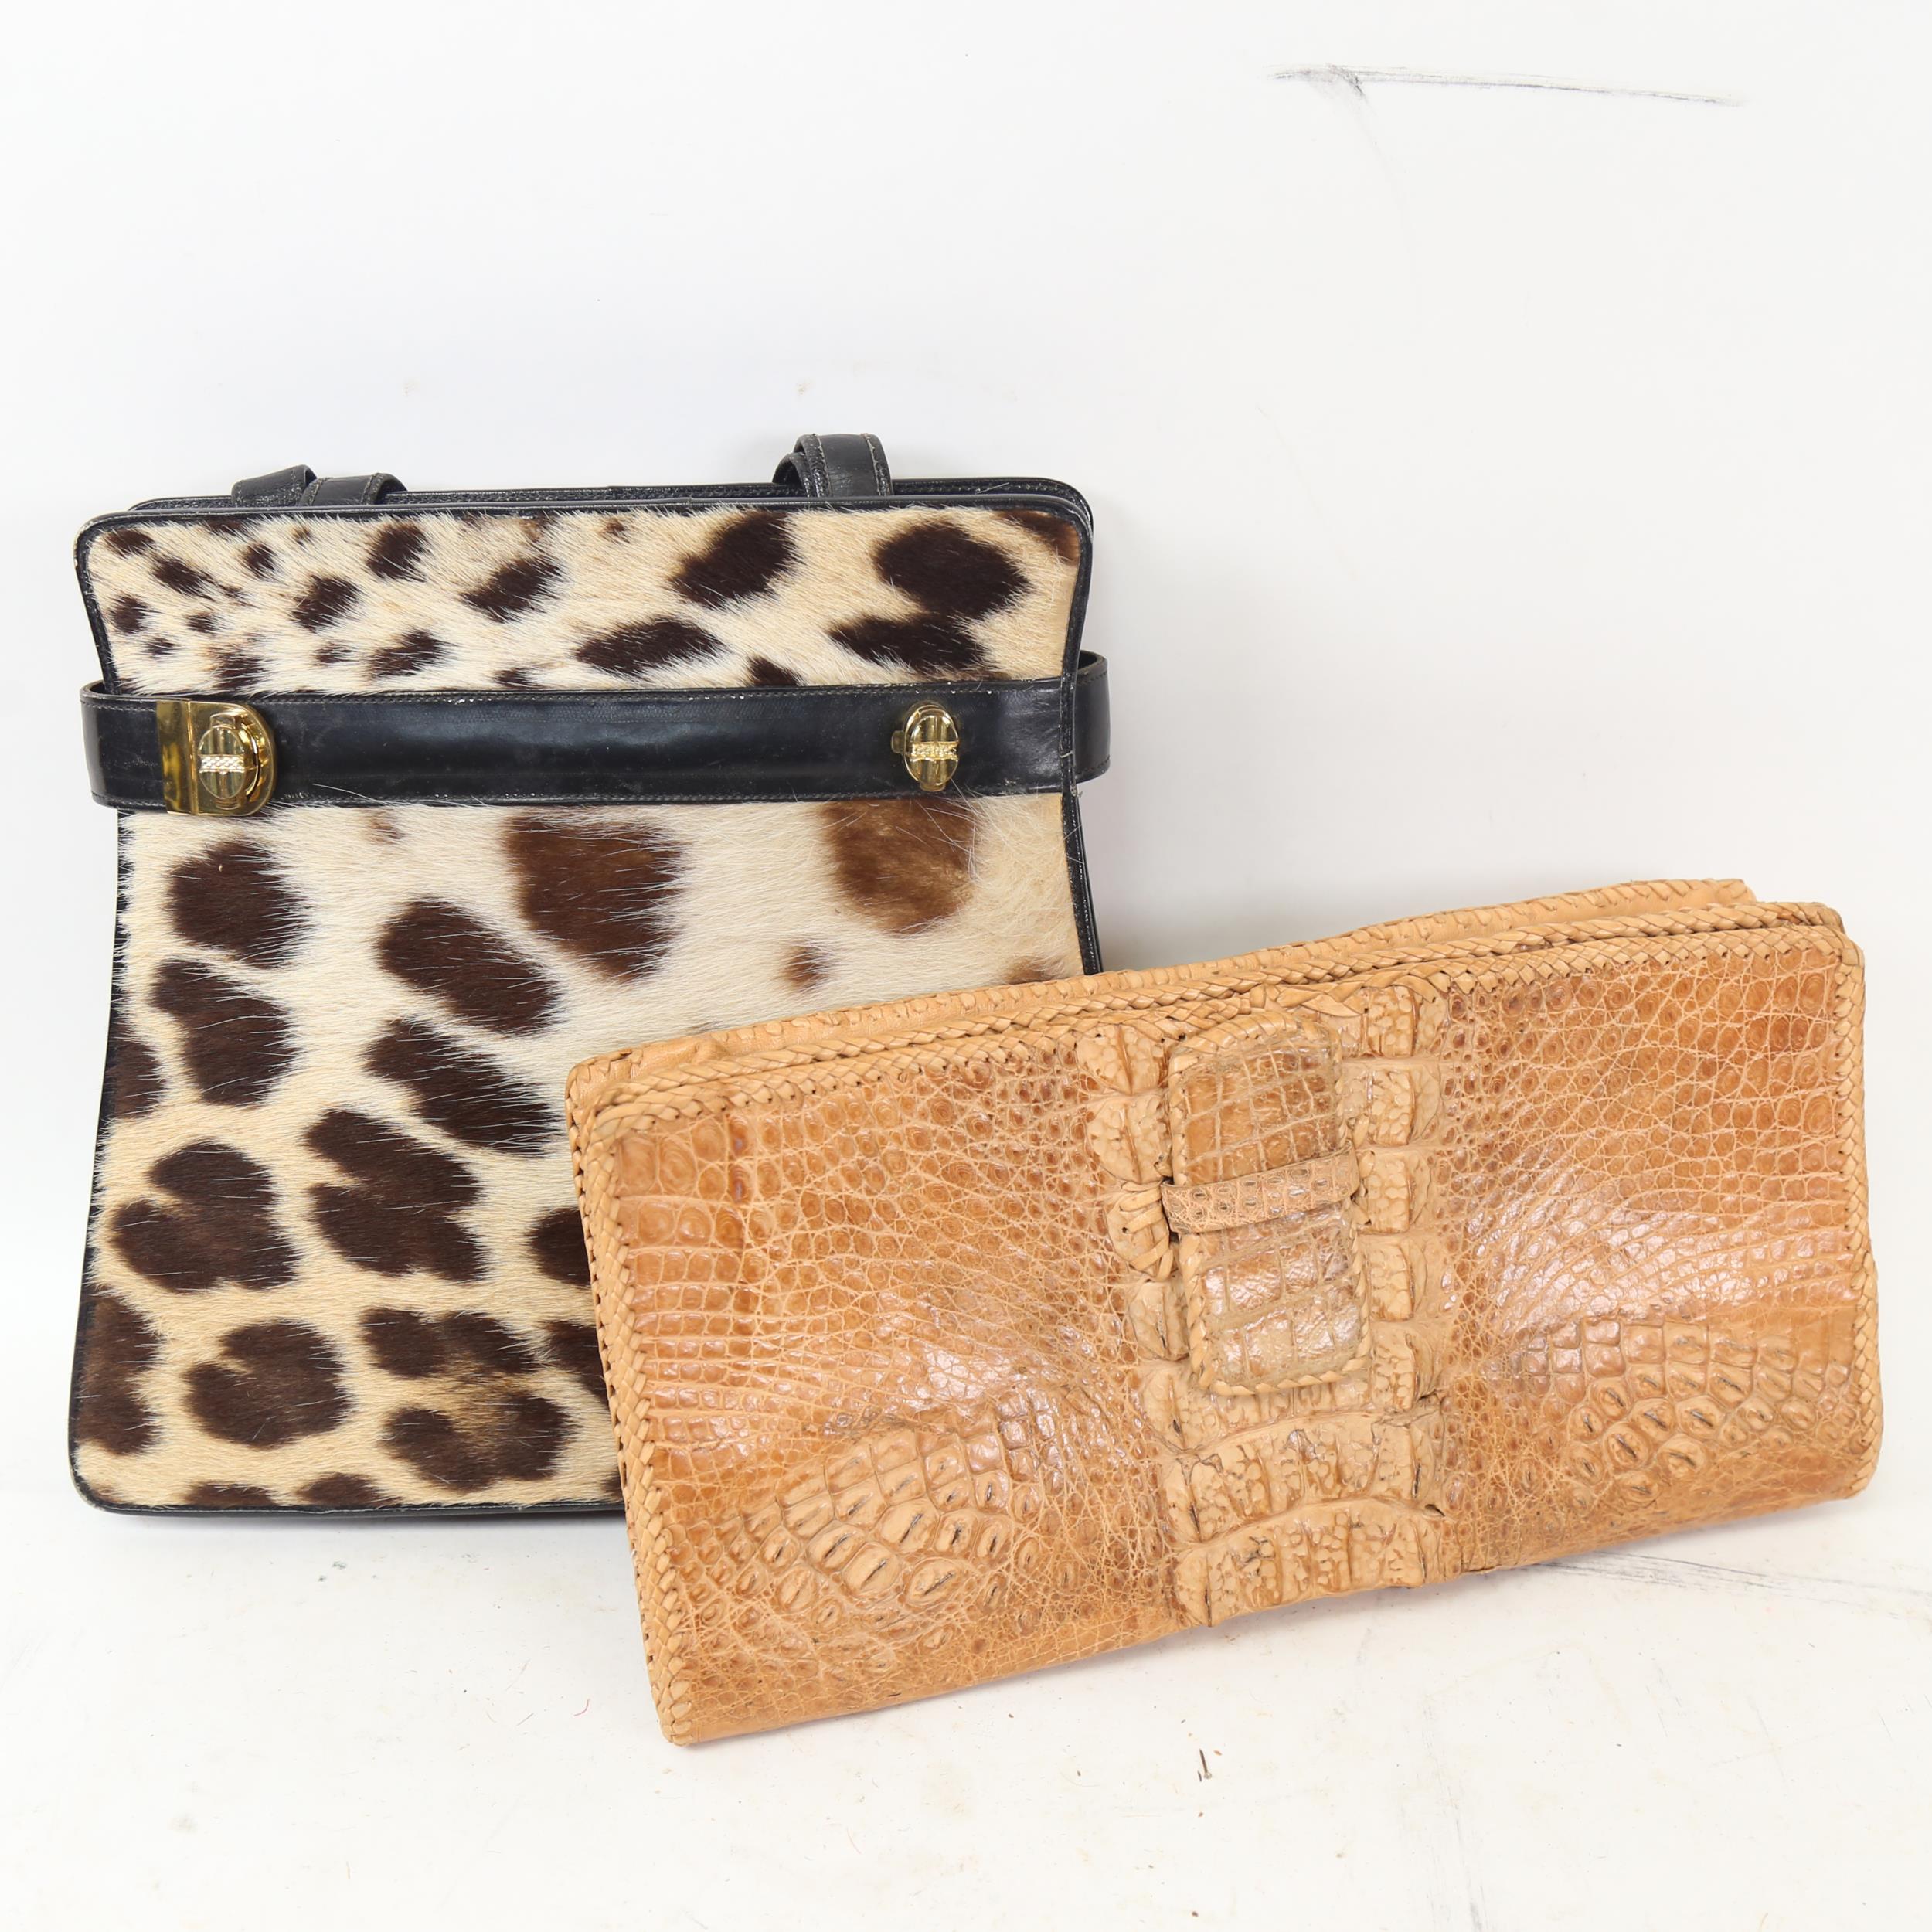 A Vintage crocodile skin clutch bag, width 30cm, and a leopard fur-covered leather handbag and purse